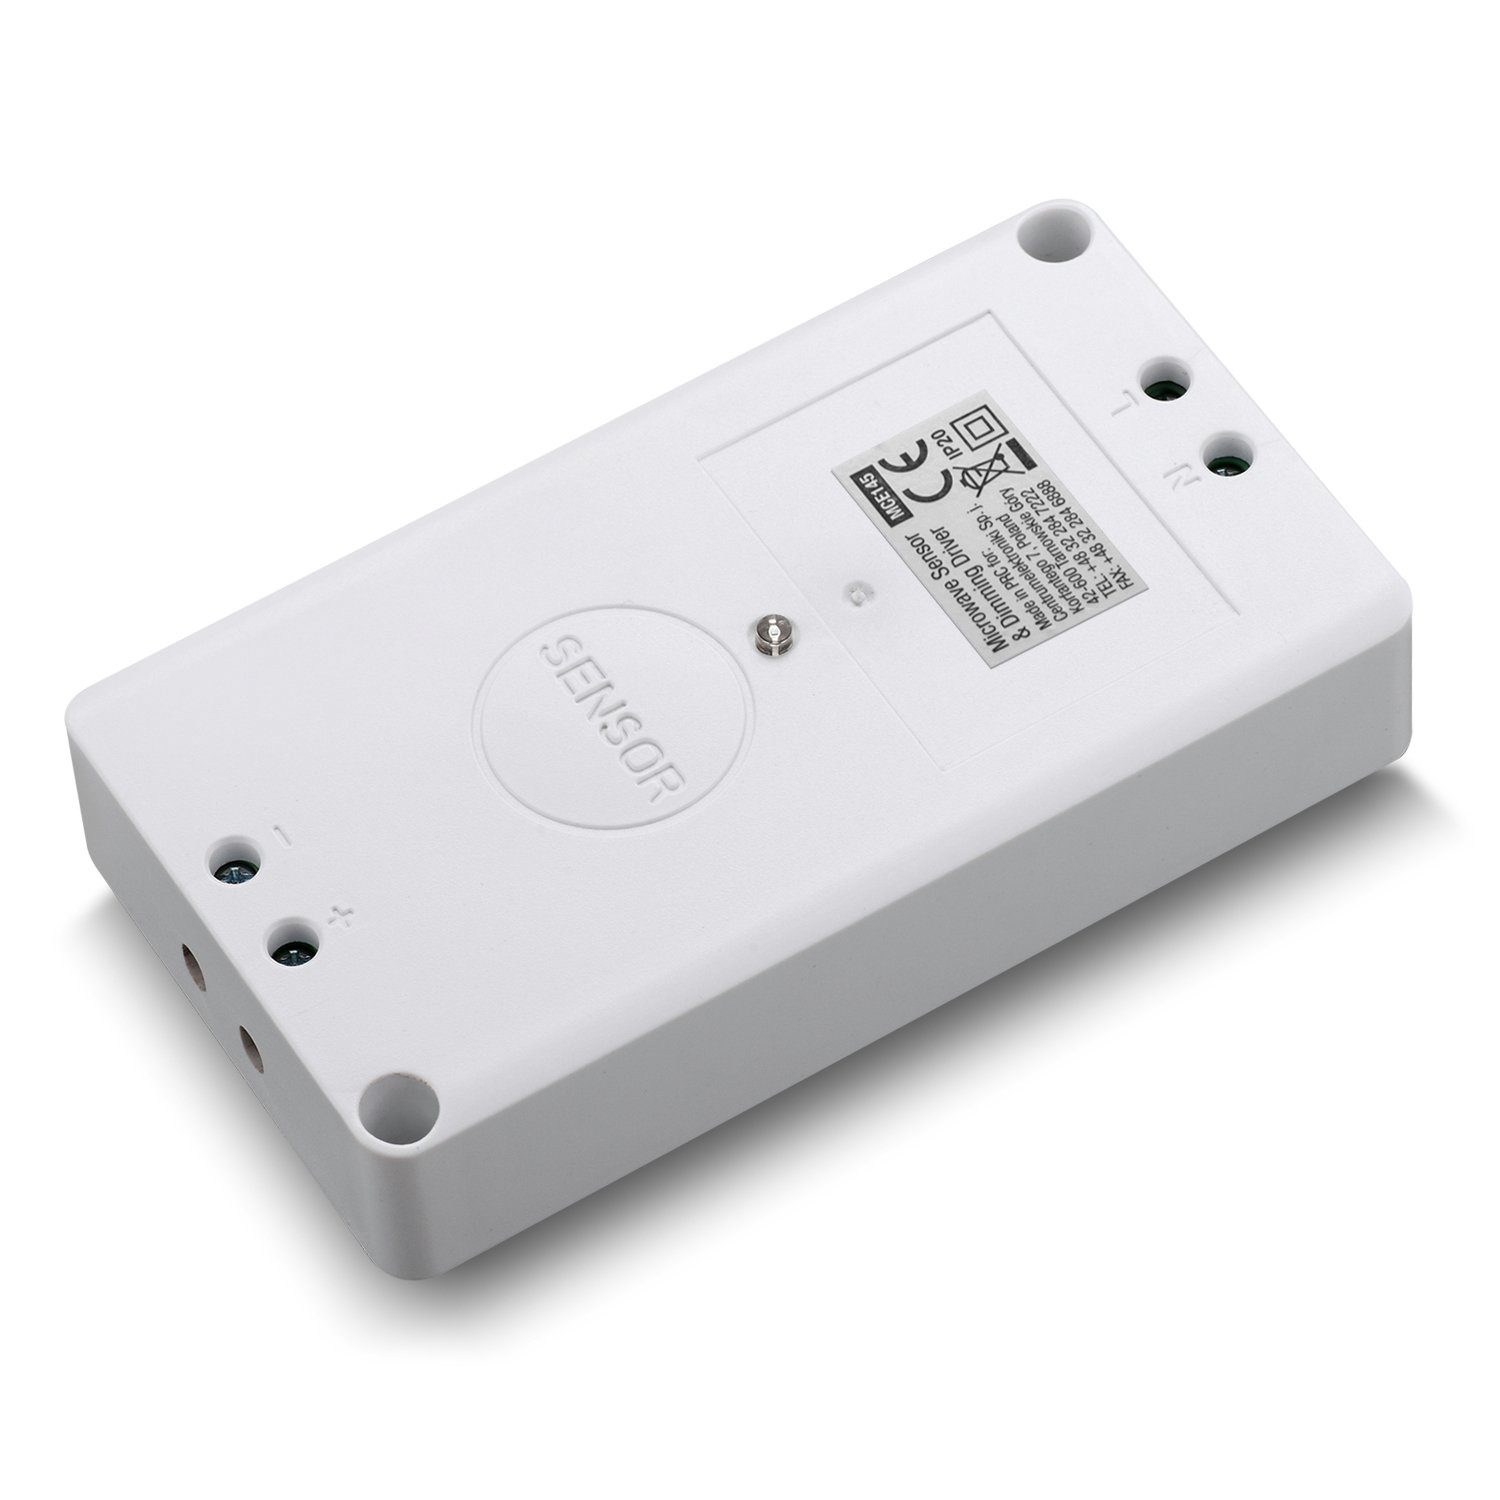 Maclean Sensor MCE145, 220-240V, 2000lux W, 0,9 50lux, 5lux, 15lux